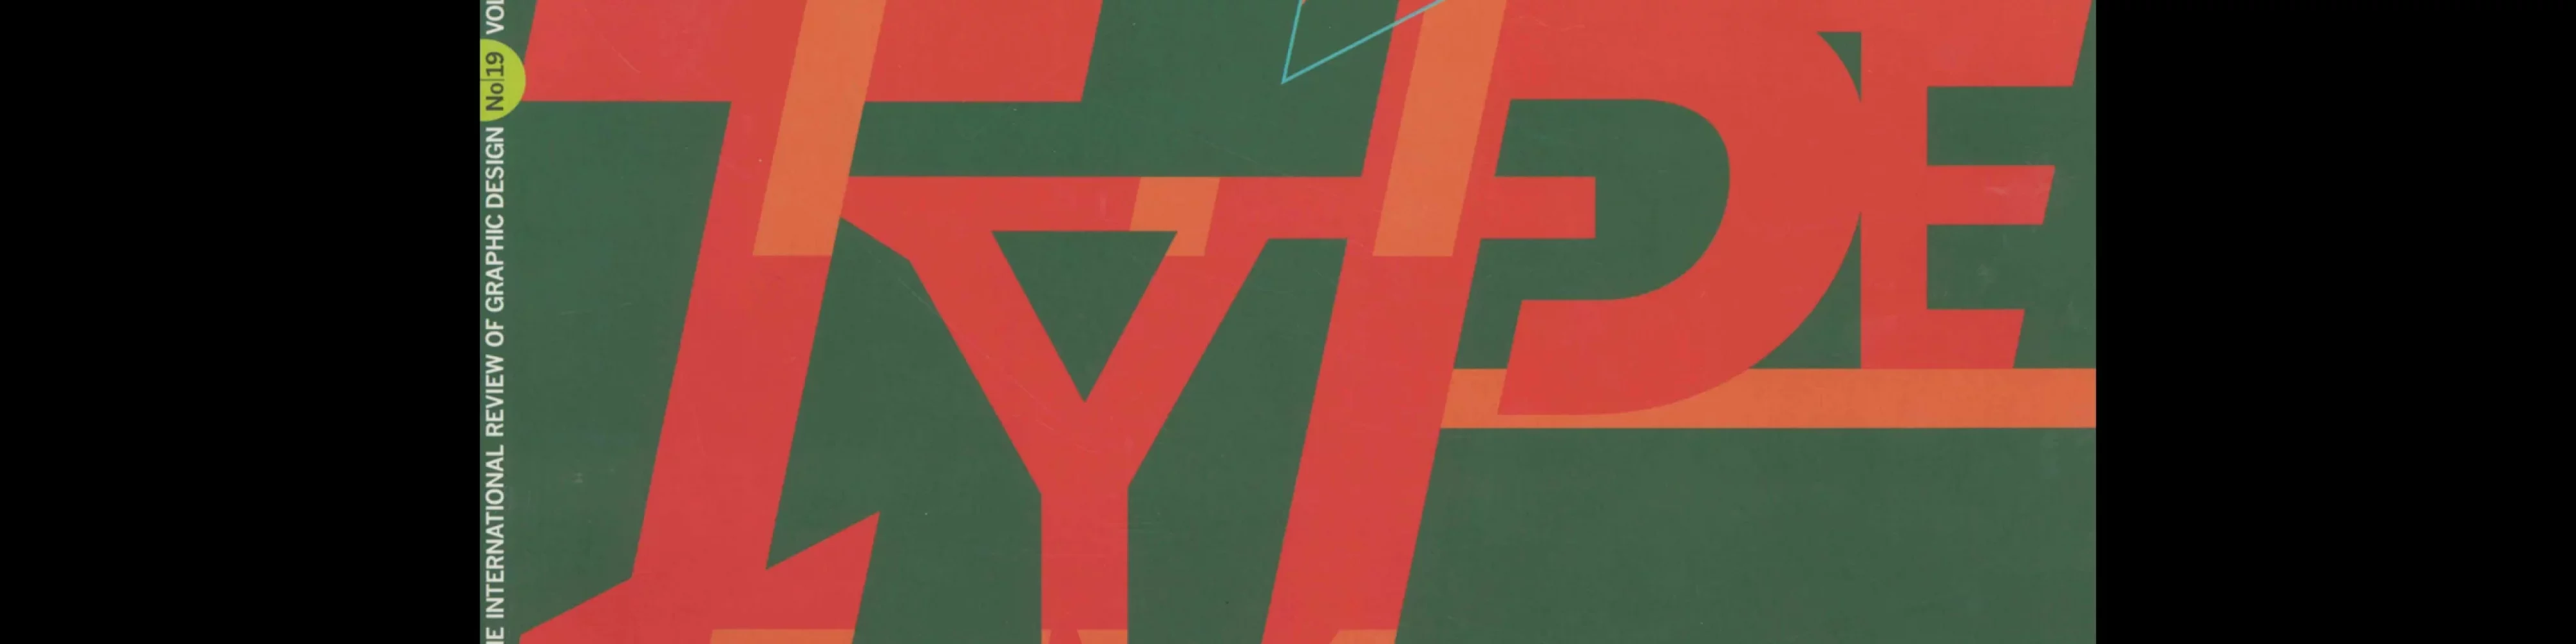 Eye, Issue 019, Winter 1995